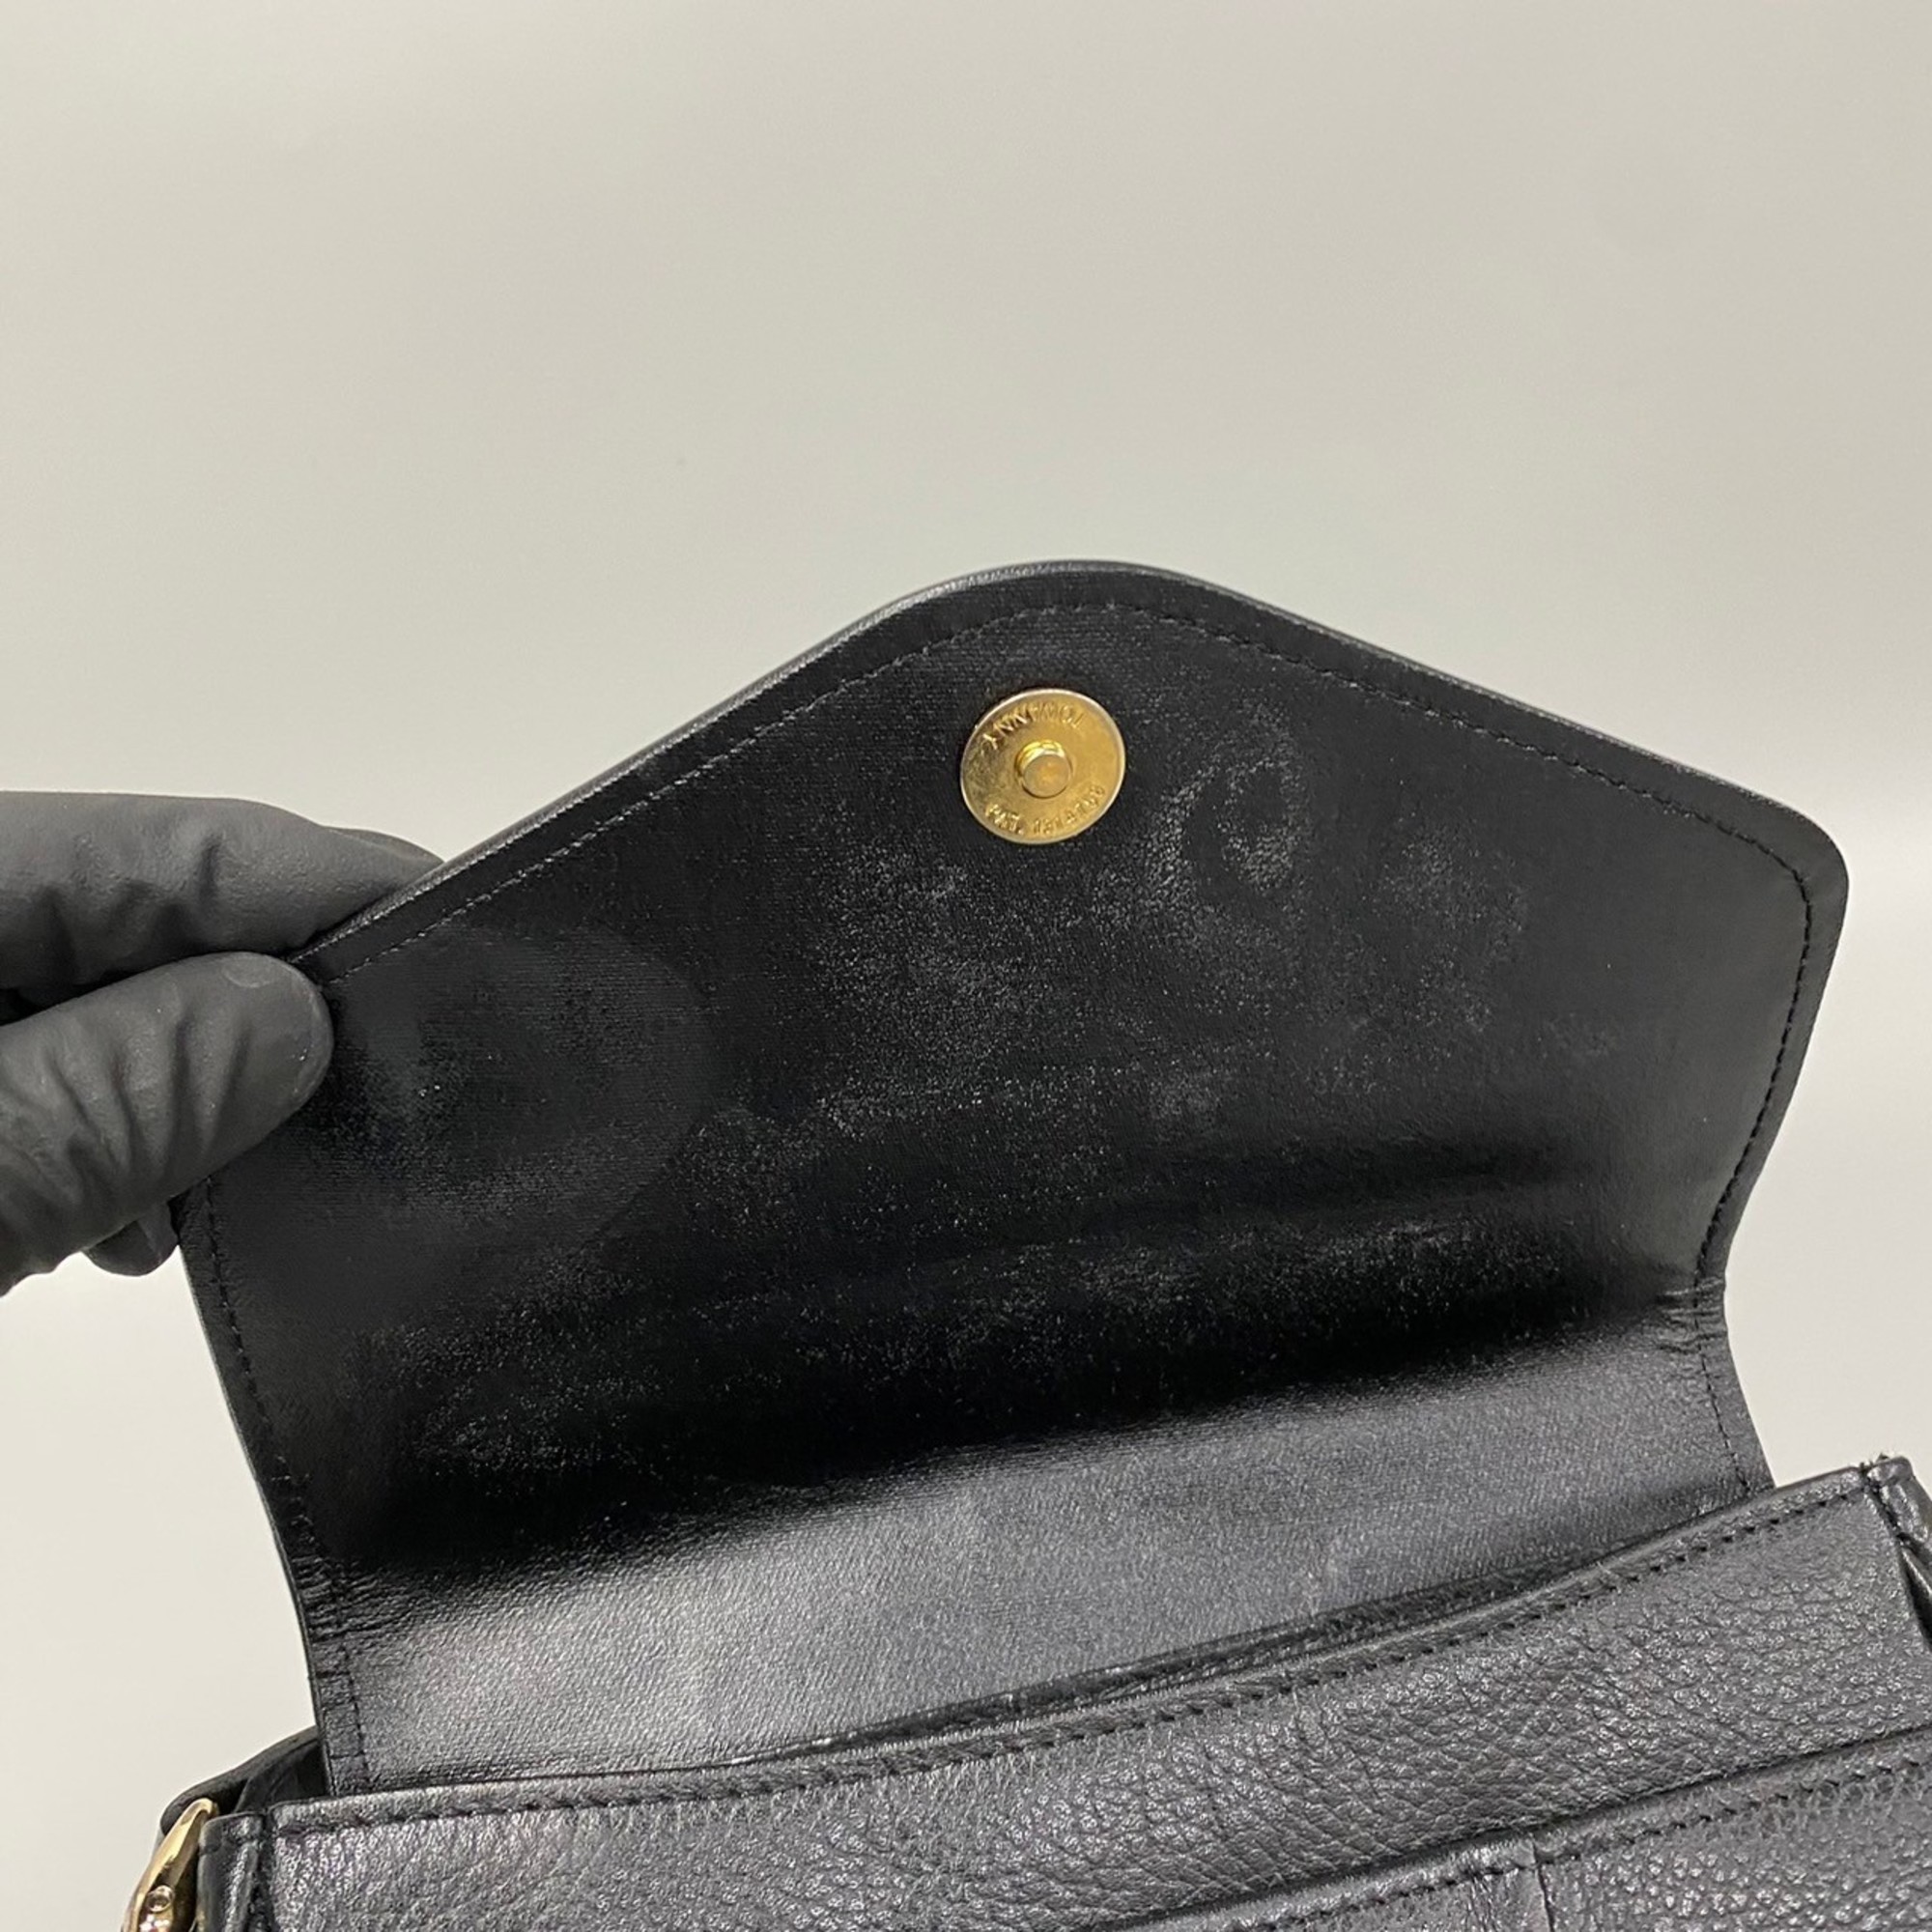 Burberrys Nova Check Leather Shoulder Bag Pochette Sacoche Black 14740